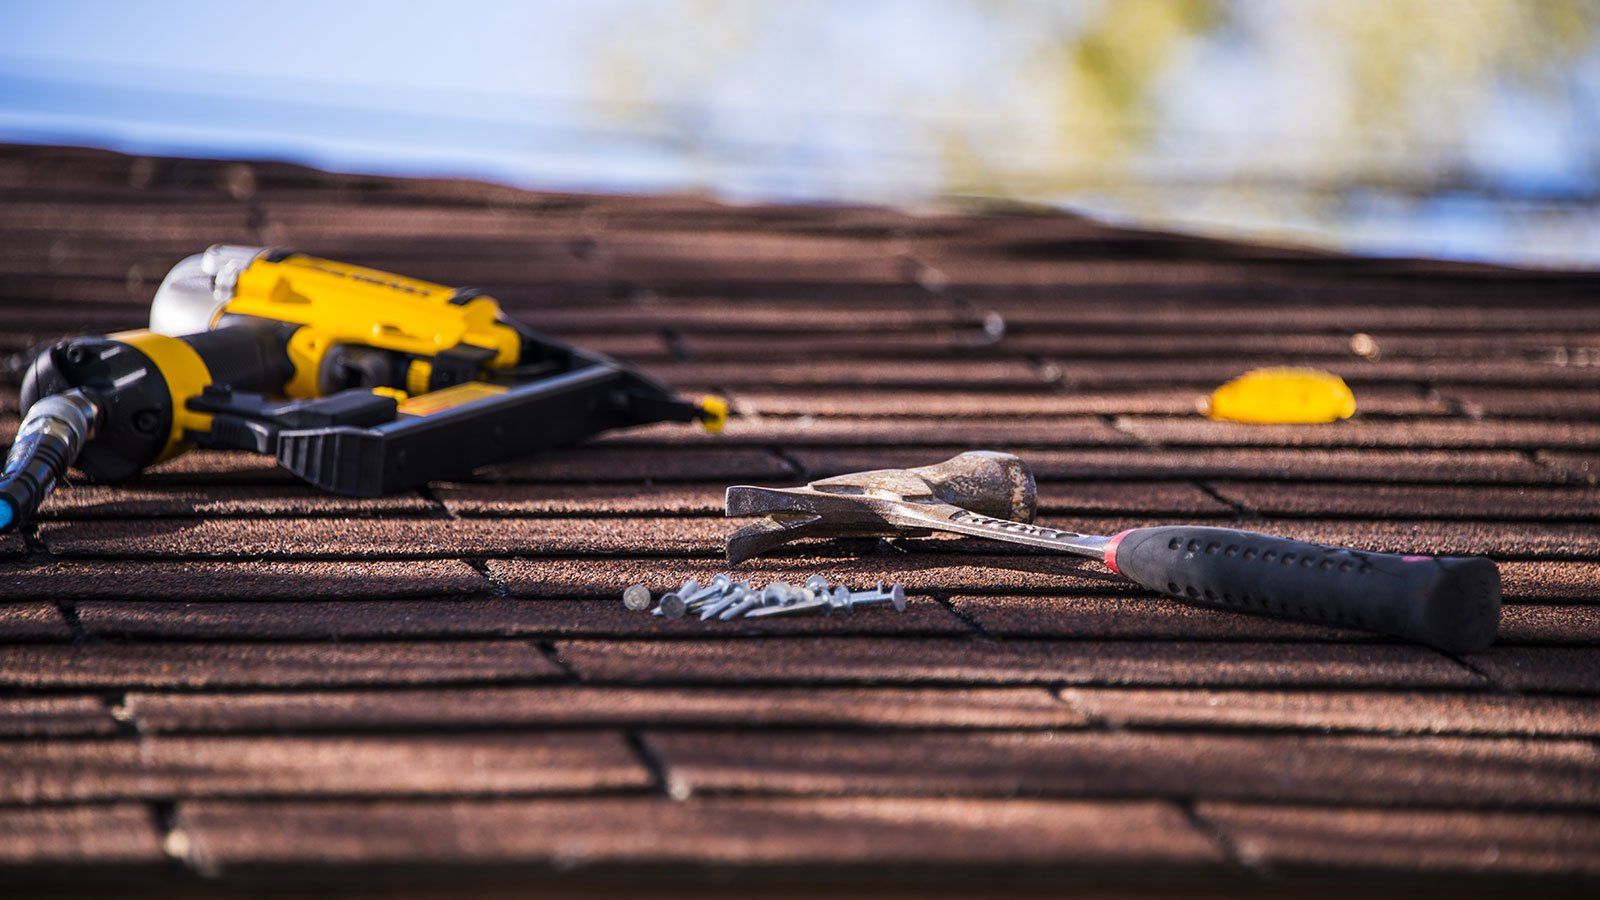 asphalt shingle roof repair with power tool